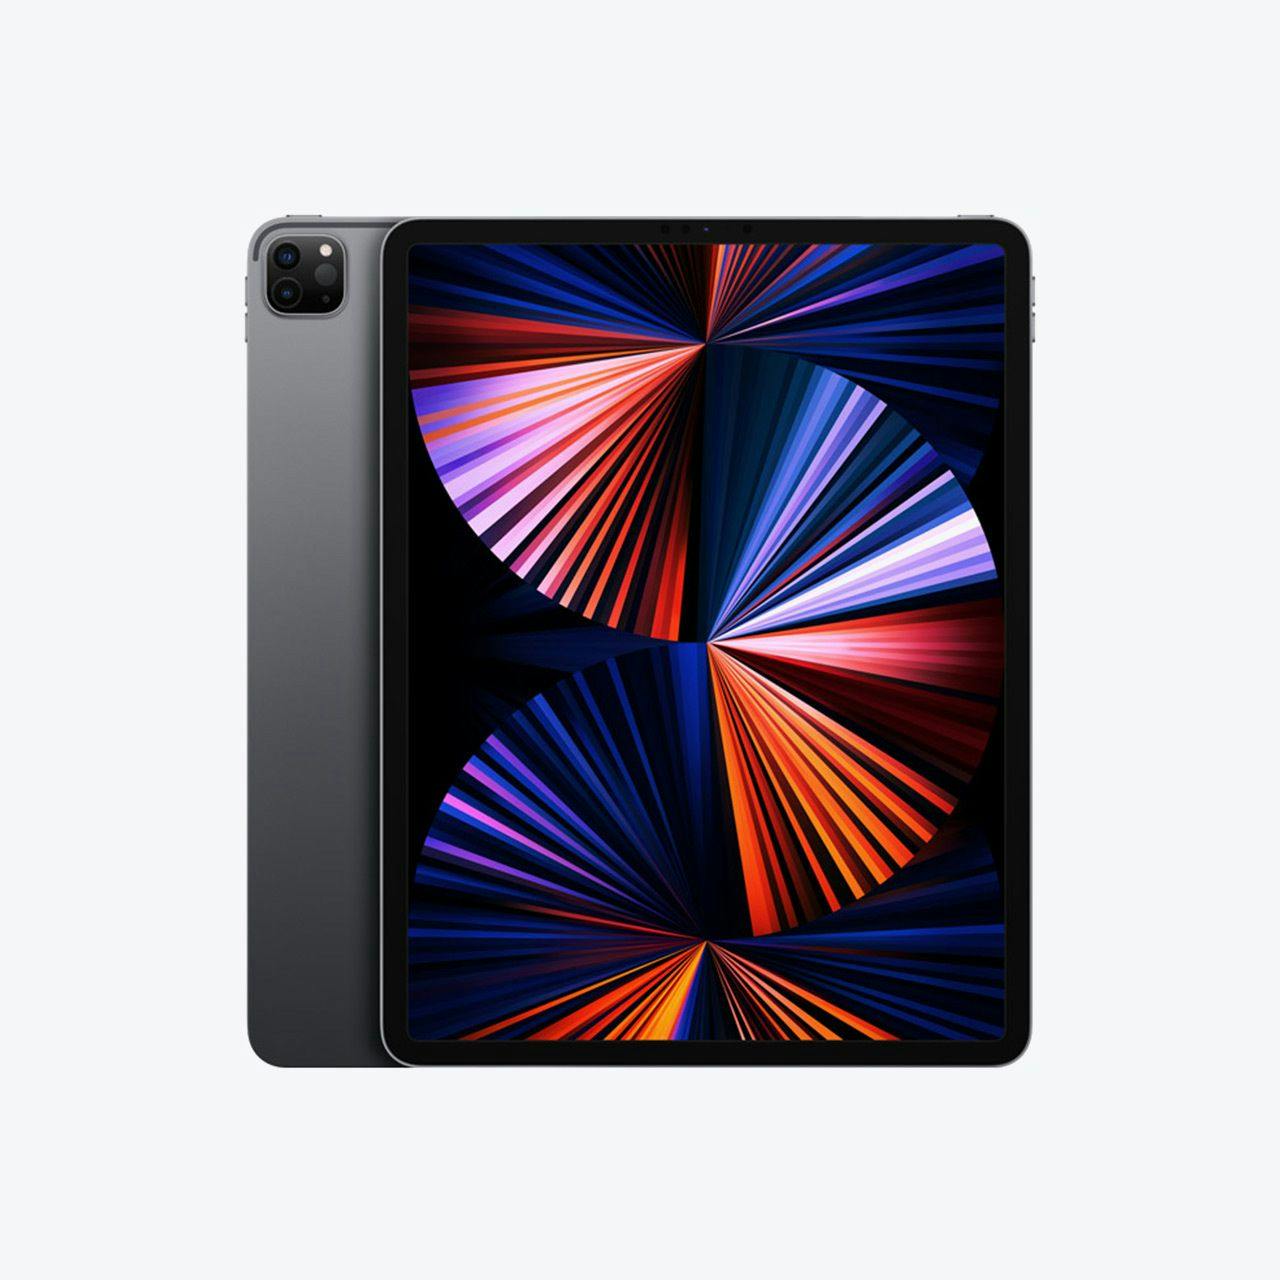 Image of iPad Pro 12.9-inch (5th Generation).